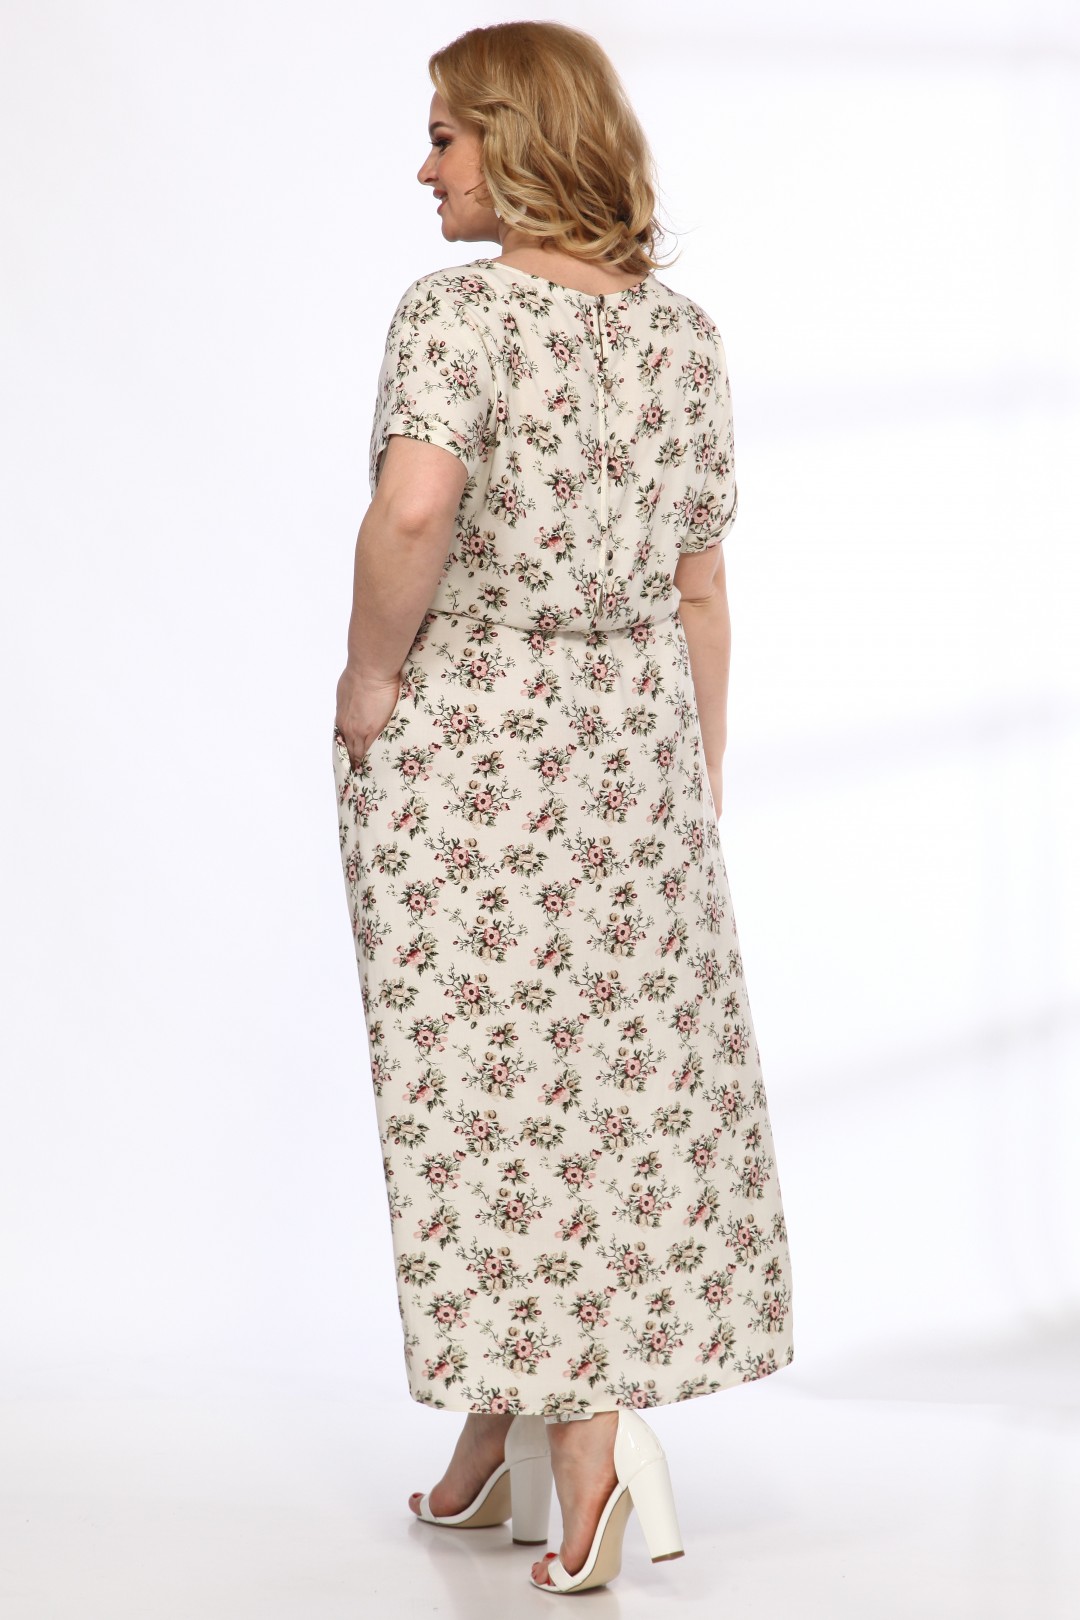 Платье Angelina & Company 542б цветы на бежевом